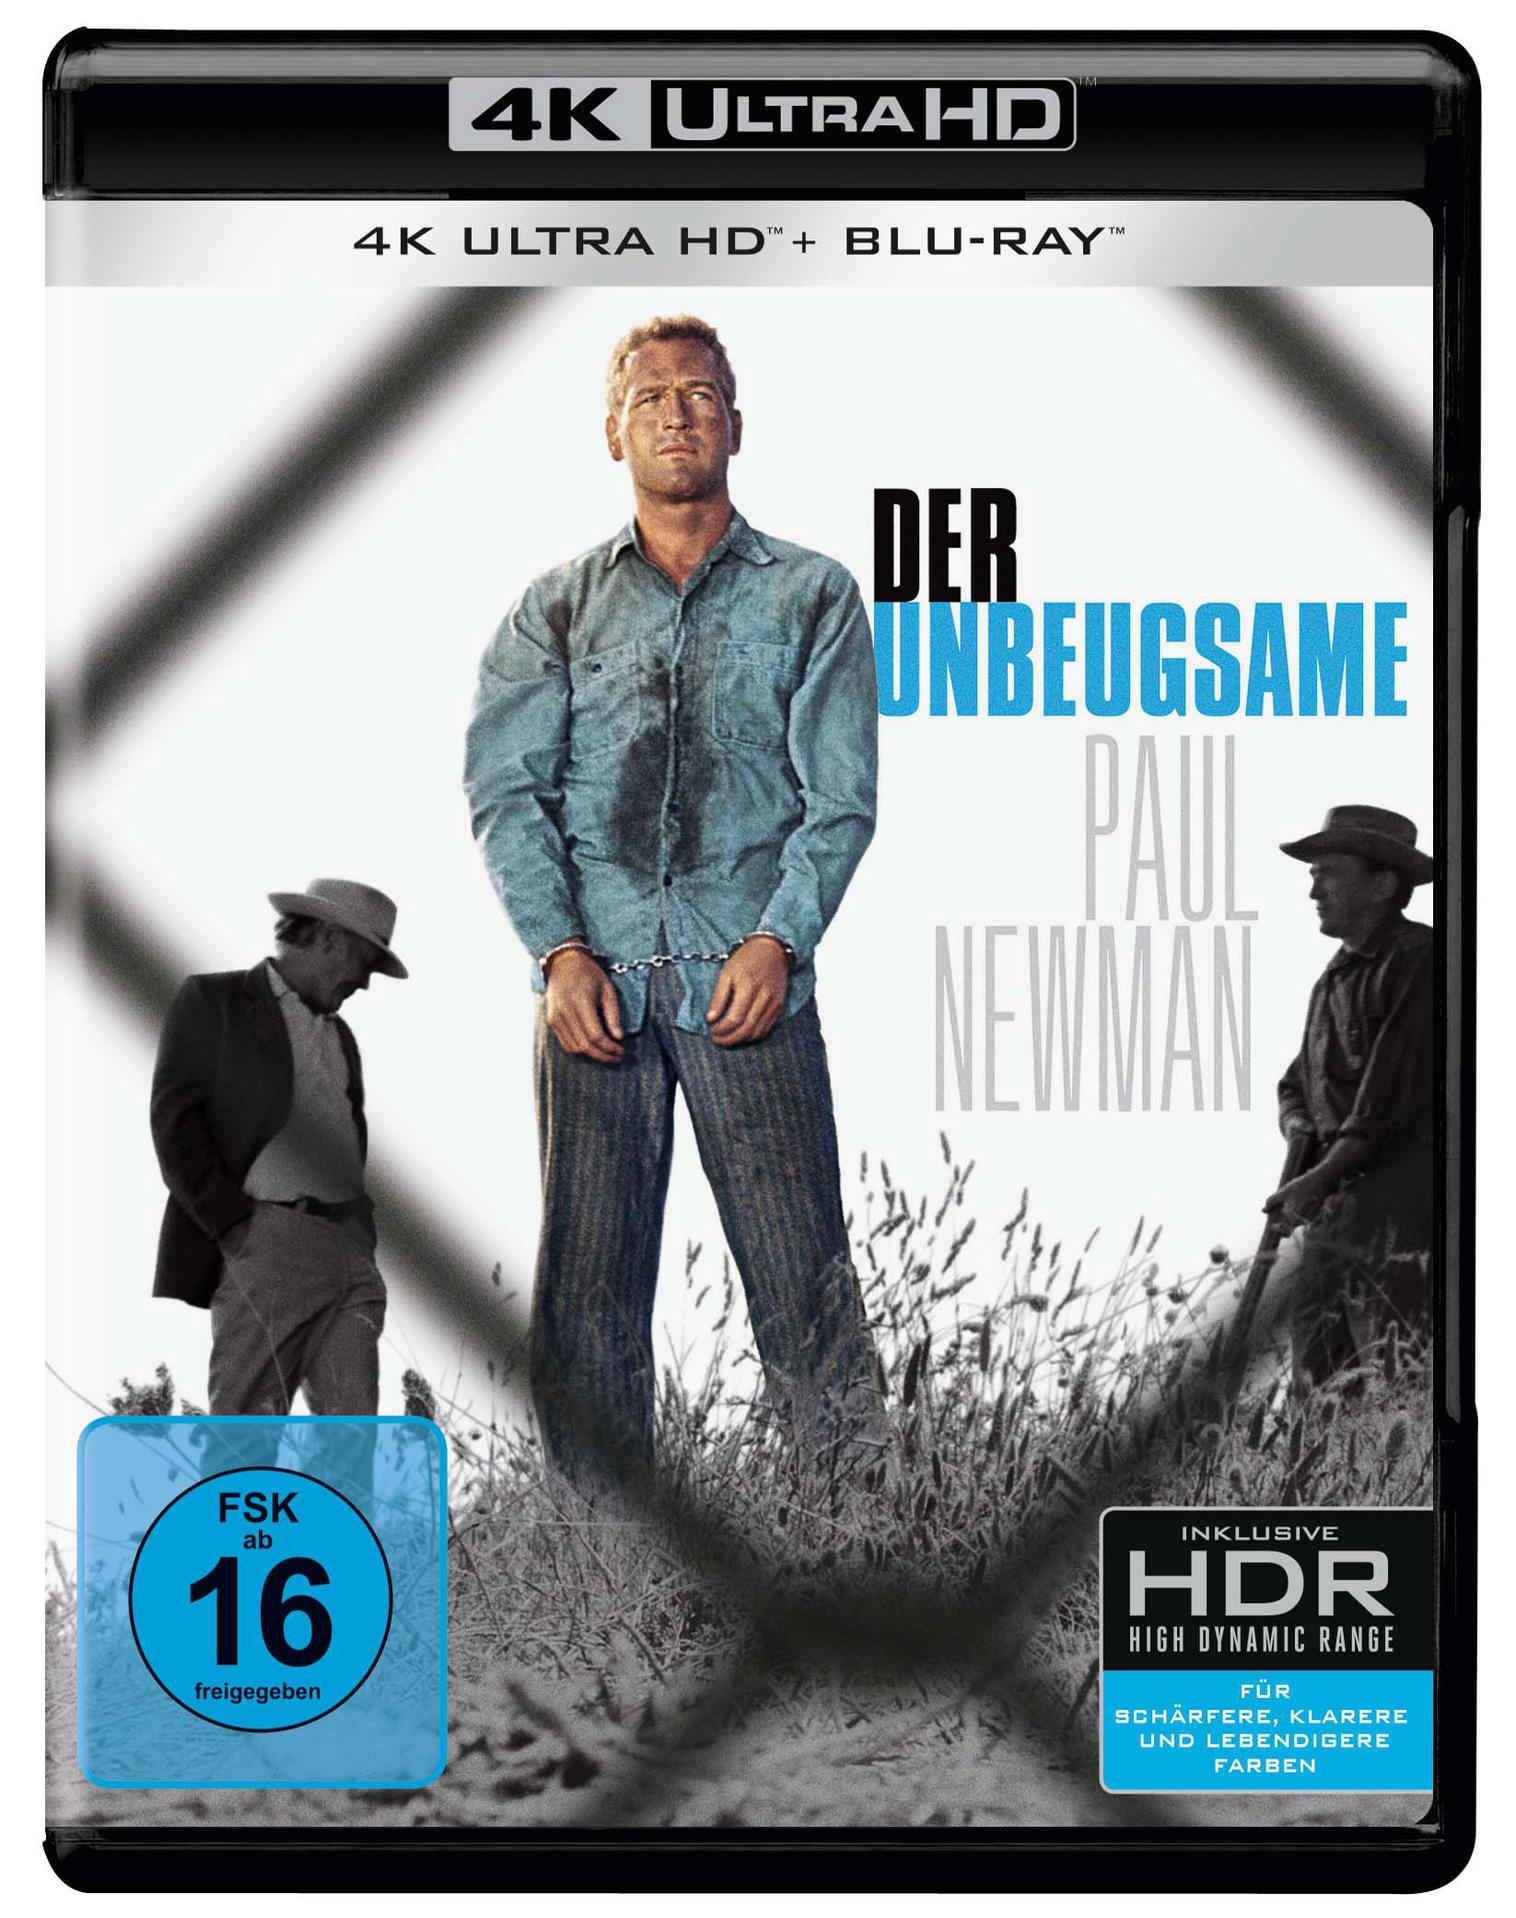 HD + Blu-ray Blu-ray Ultra Der 4K Unbeugsame